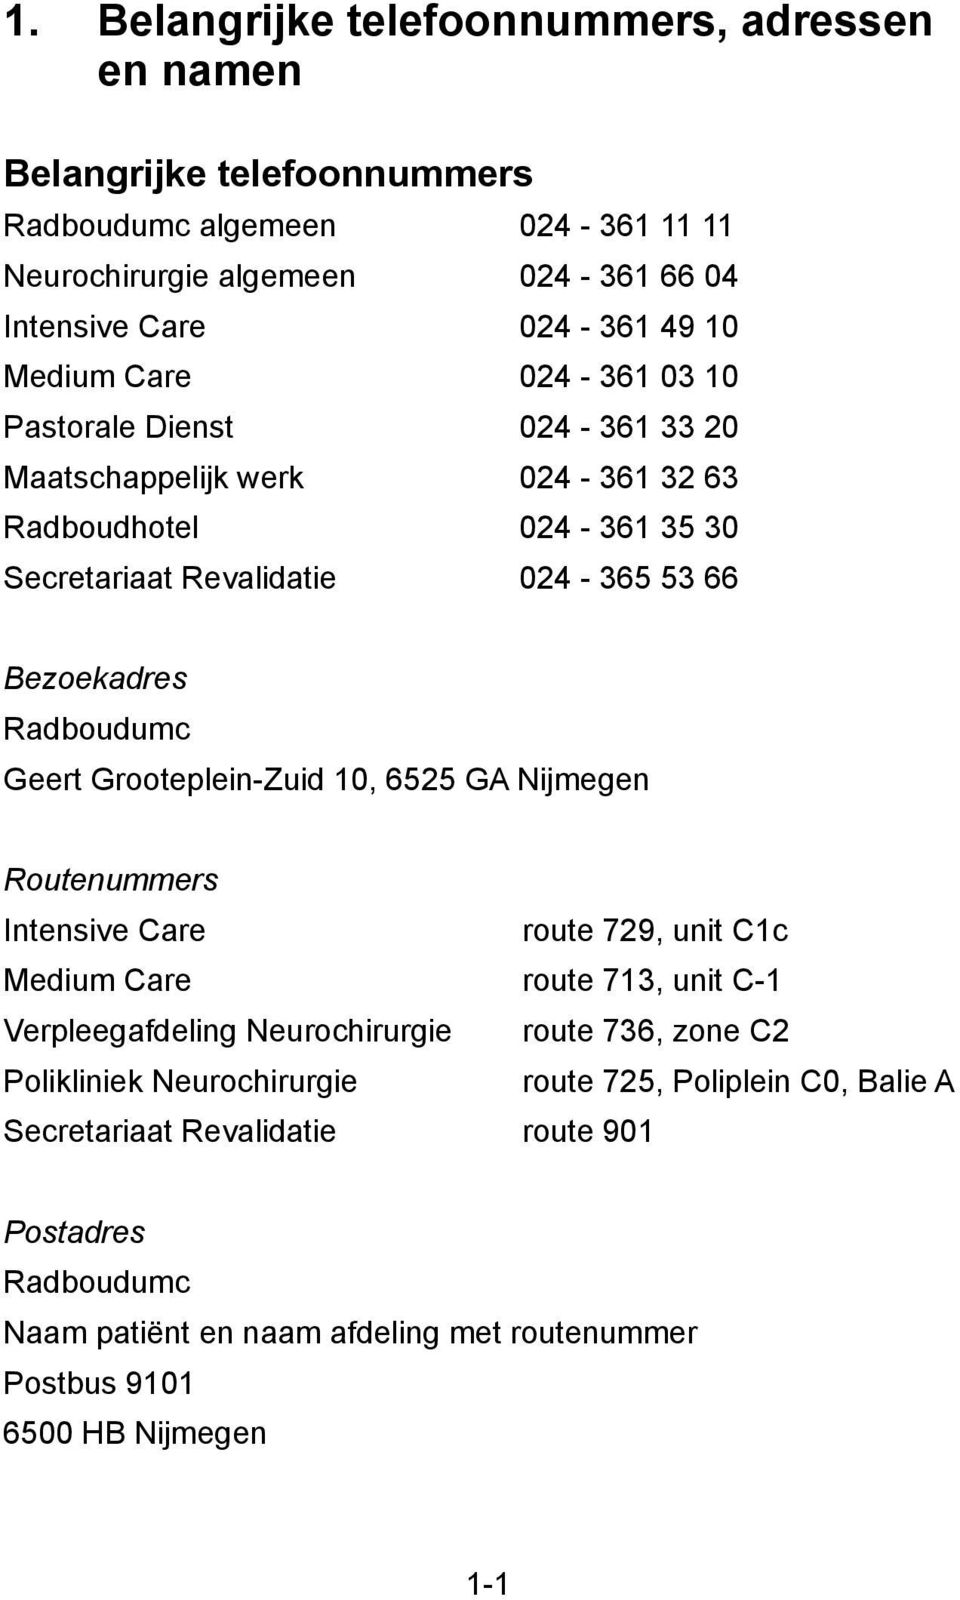 Geert Grooteplein-Zuid 10, 6525 GA Nijmegen Routenummers Intensive Care route 729, unit C1c Medium Care route 713, unit C-1 Verpleegafdeling Neurochirurgie route 736, zone C2